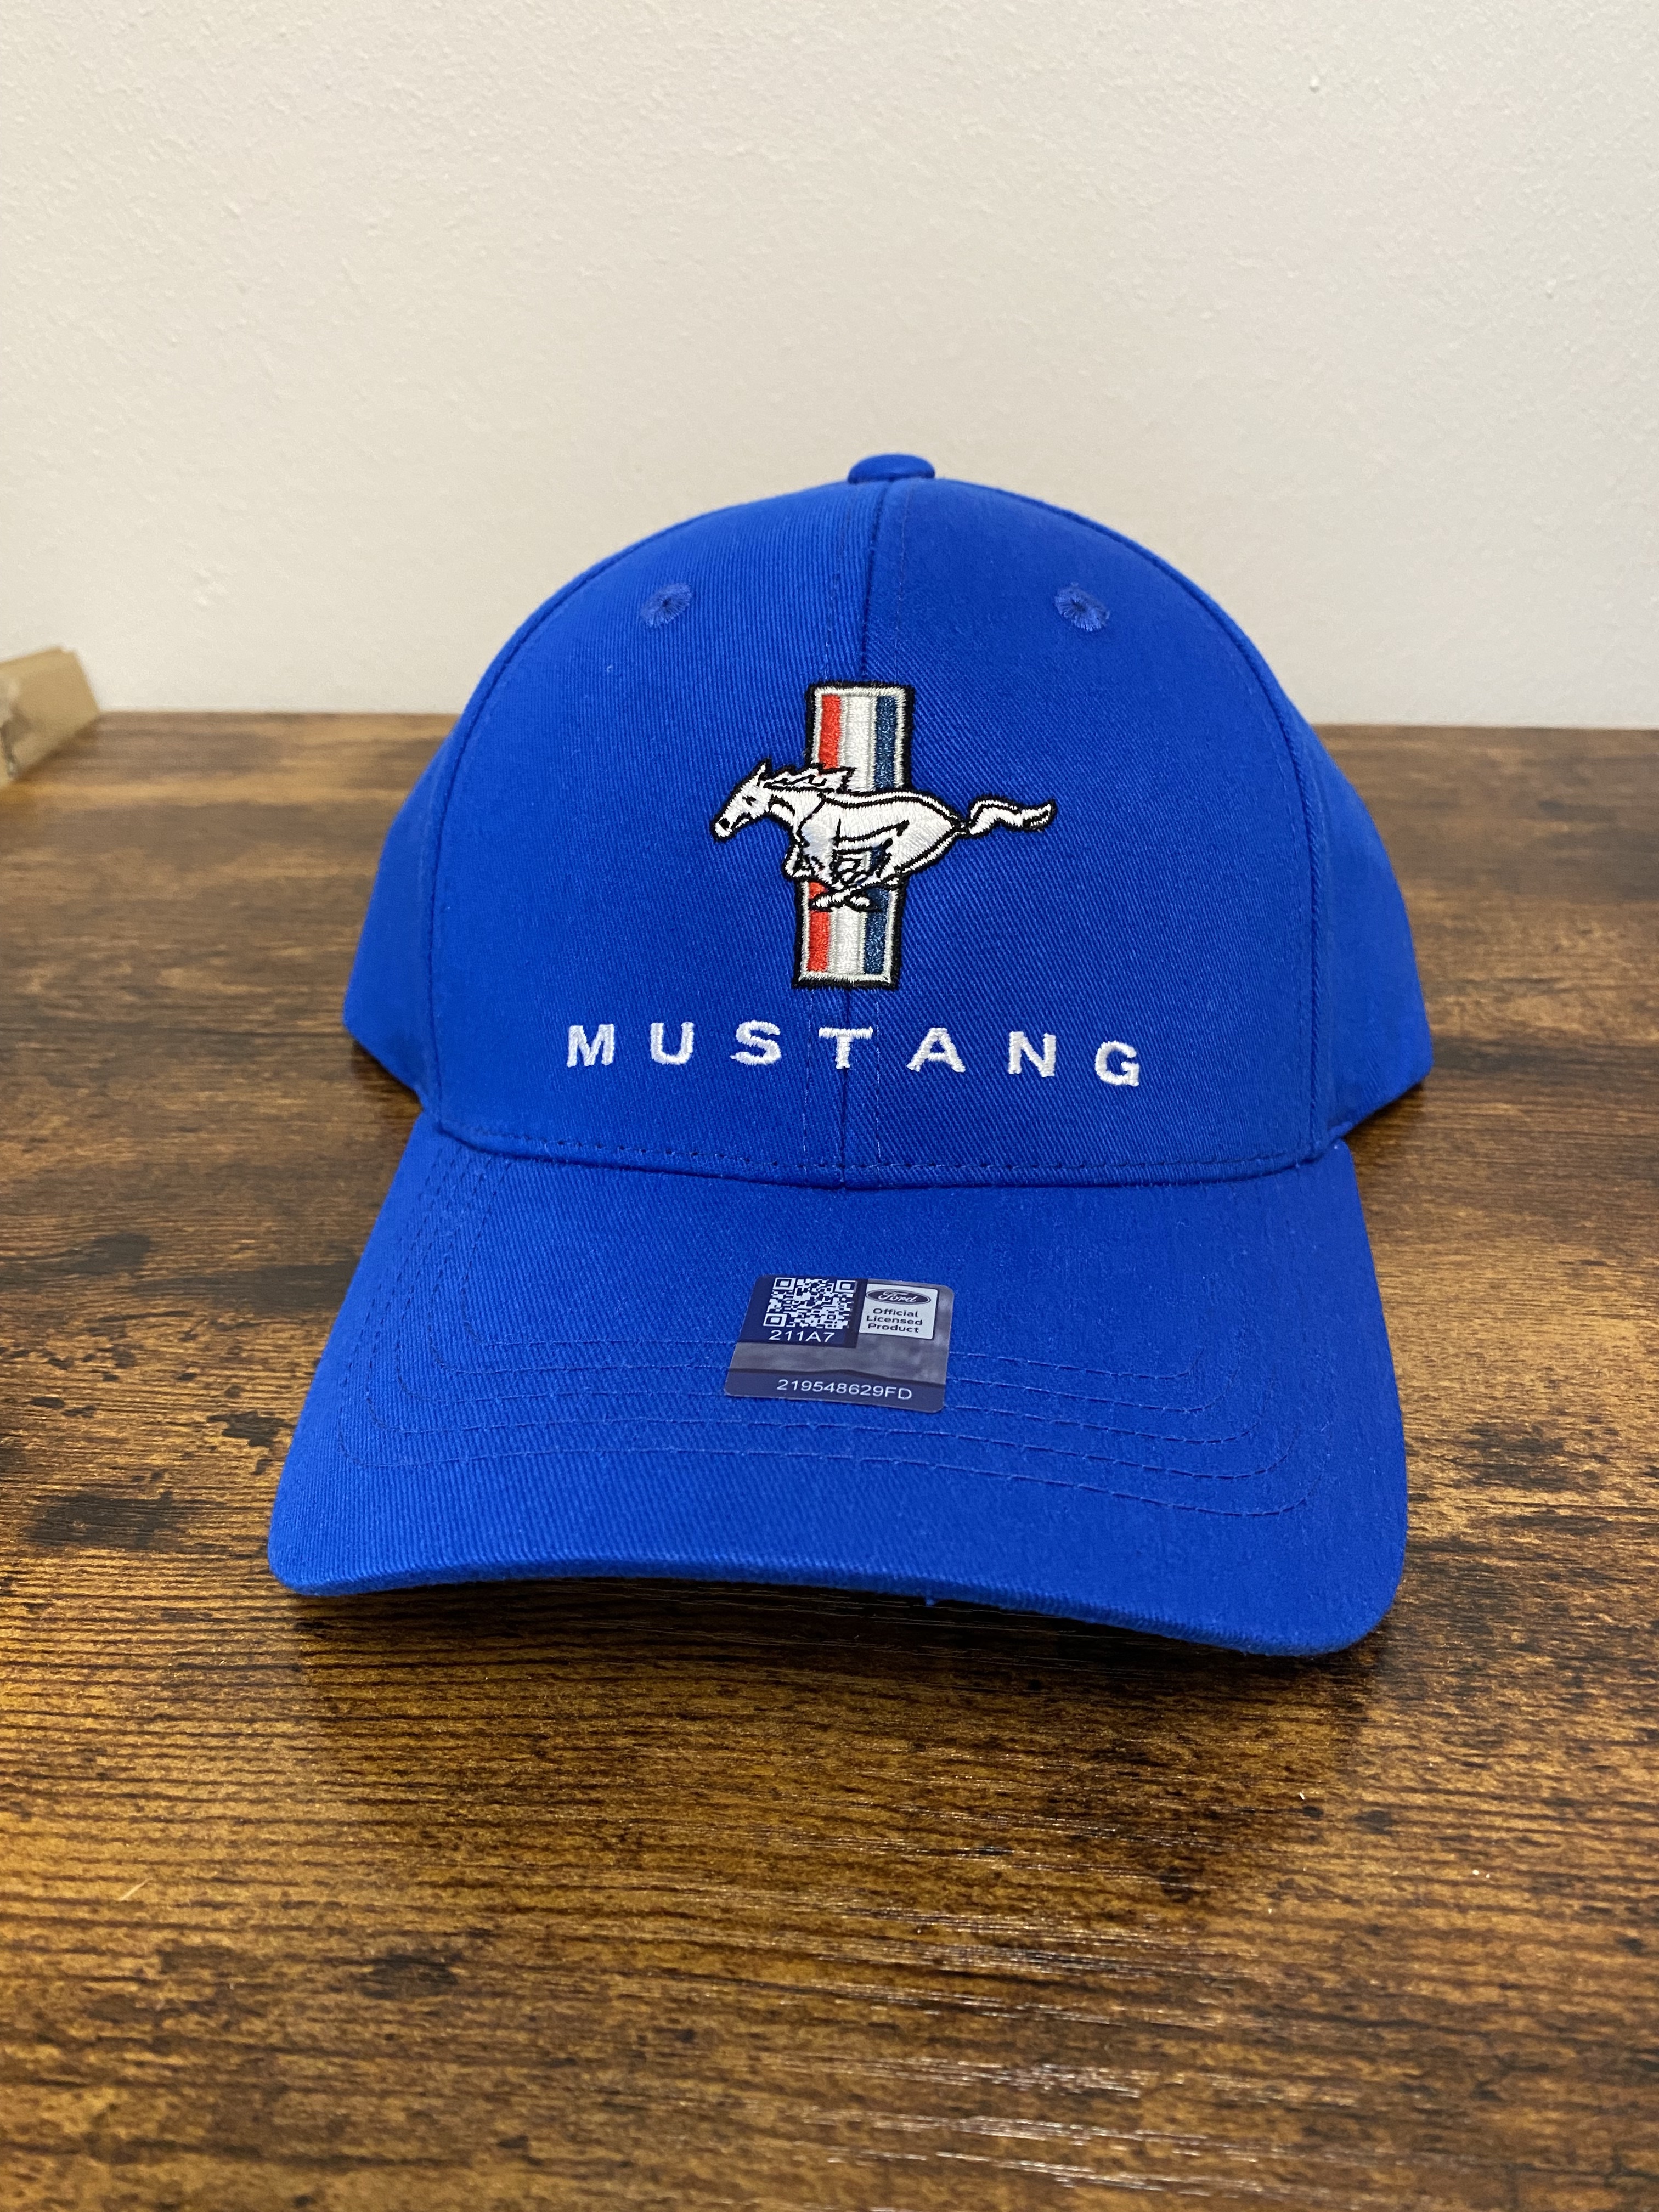 Ford Mustang Baseball Cap blau mit Tri-Bar Pony und Mustang Schriftzug